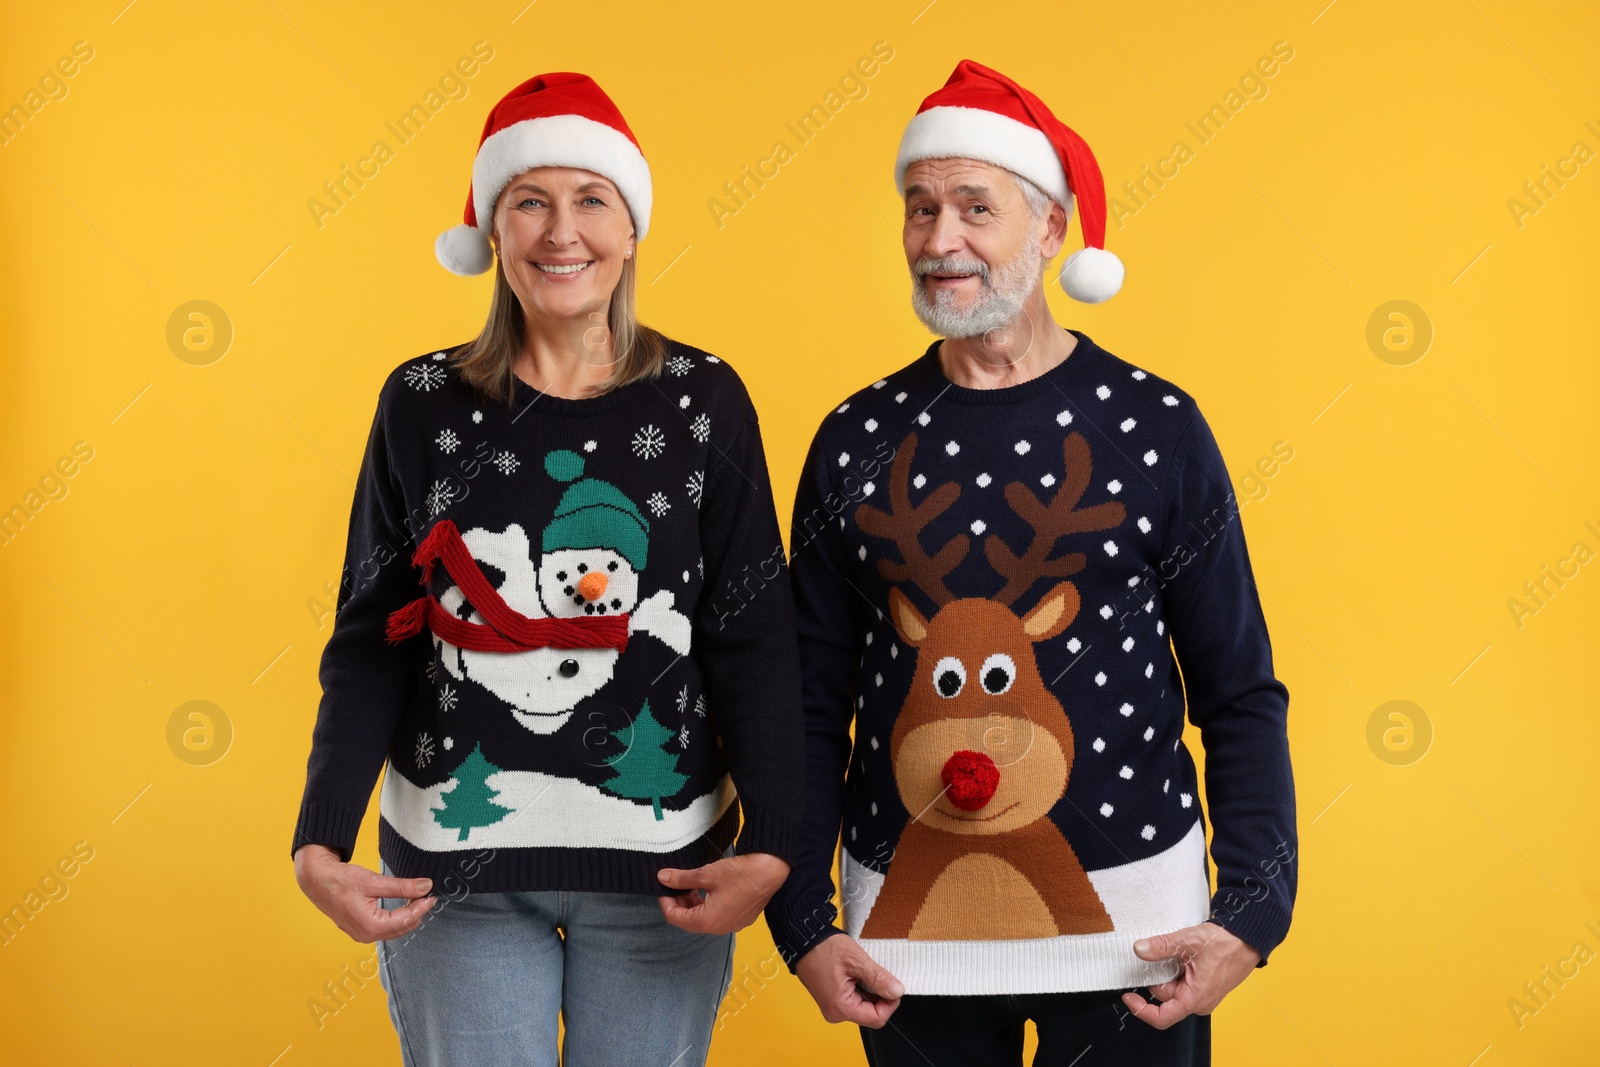 Photo of Happy senior couple in Santa hats showing Christmas sweaters on orange background